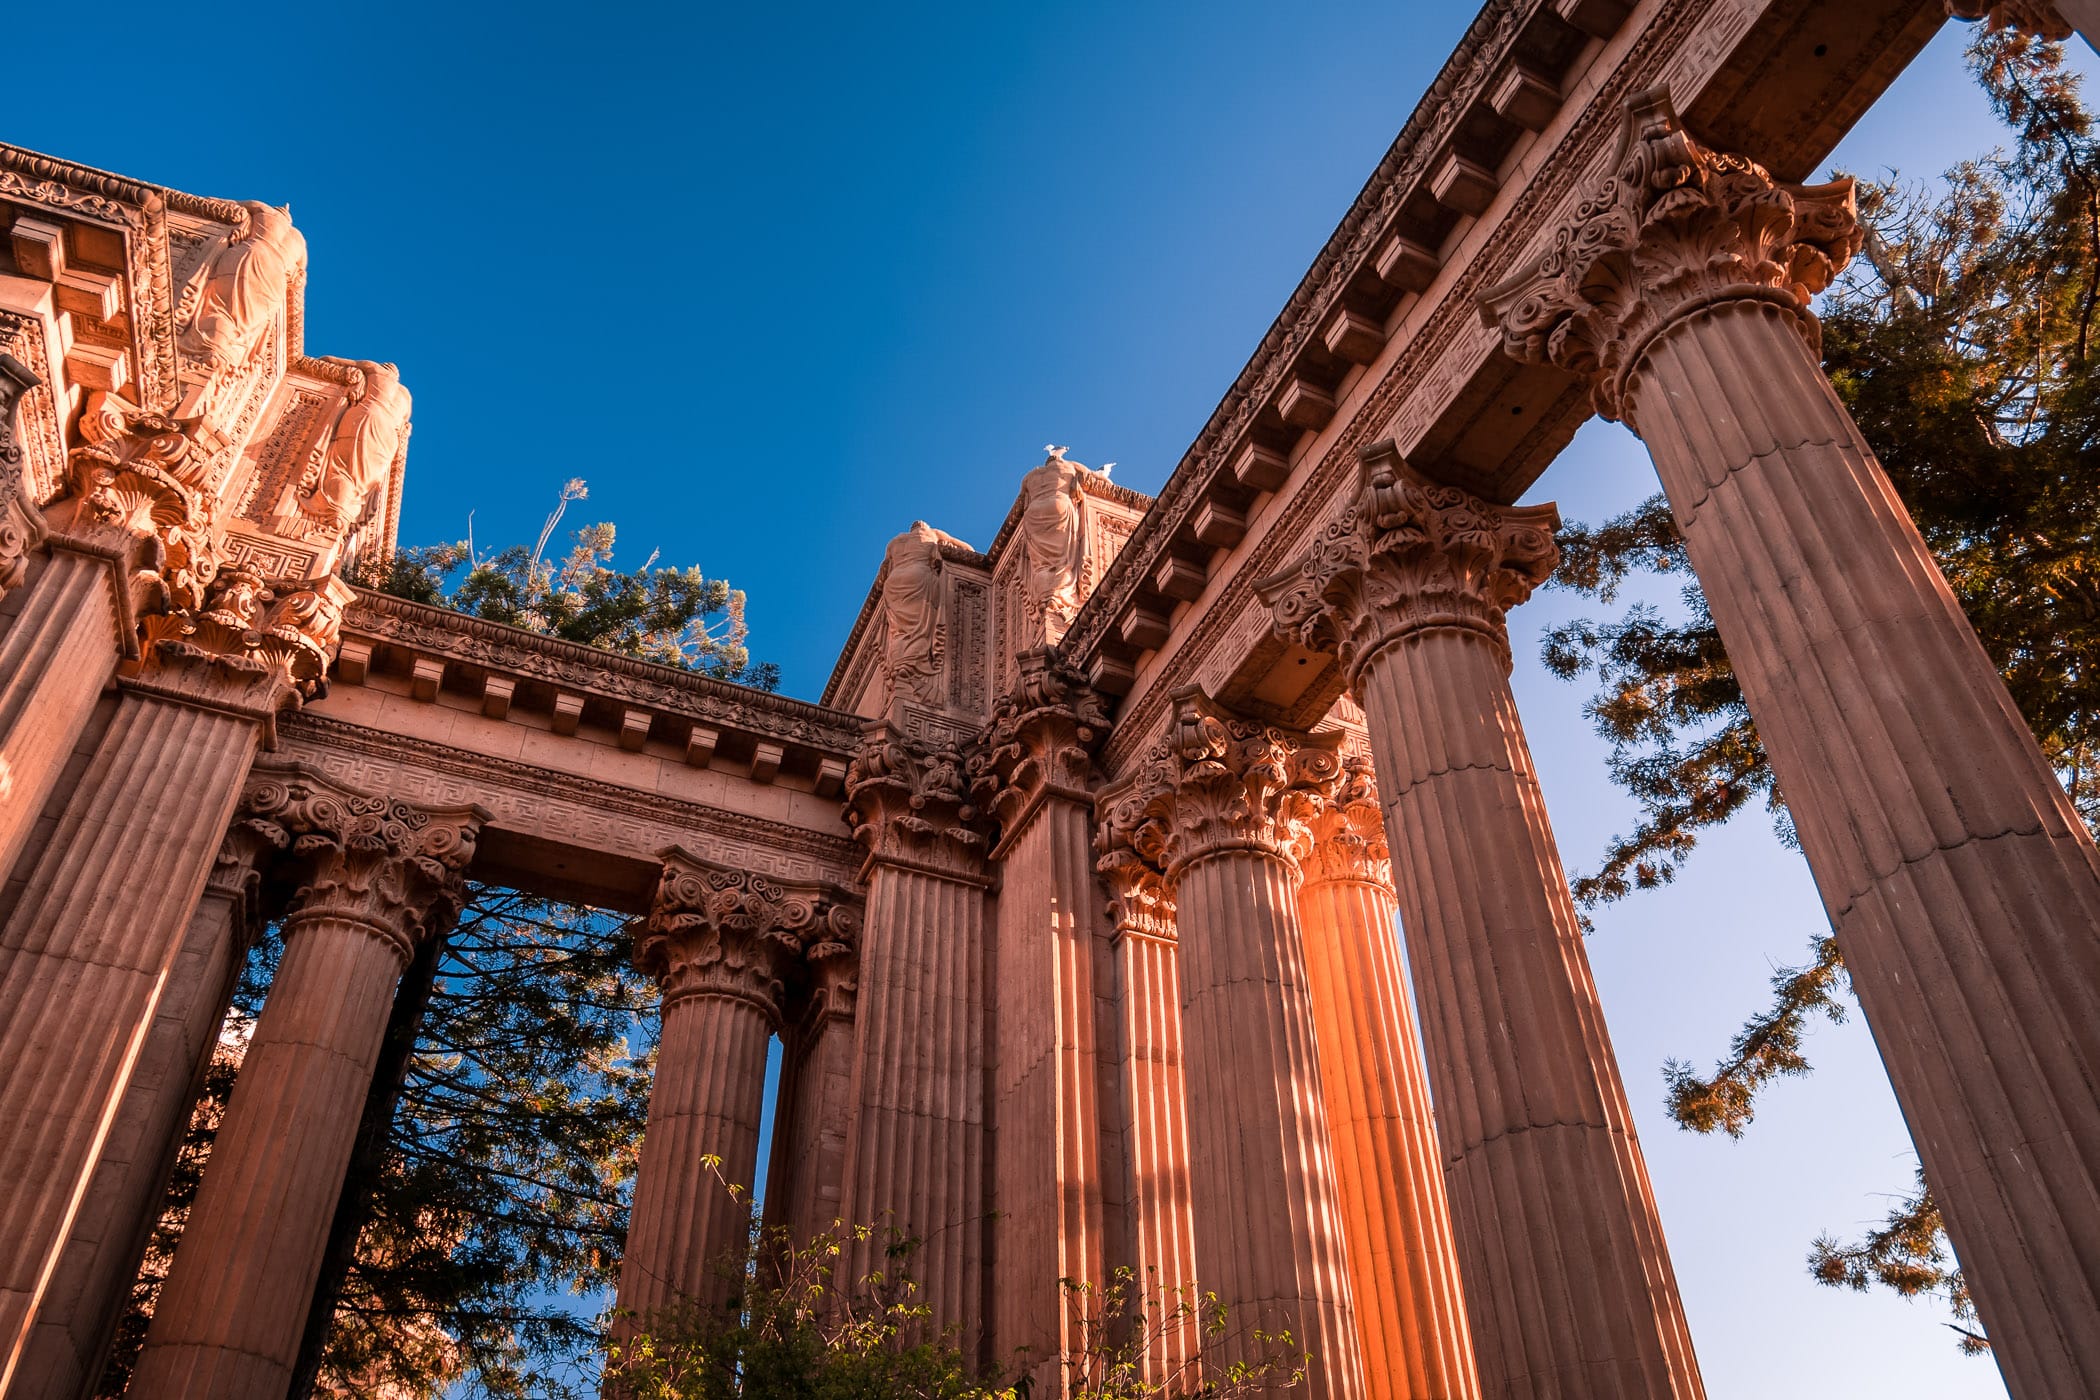 The morning sun illuminates columns at San Francisco's Palace of Fine Arts.